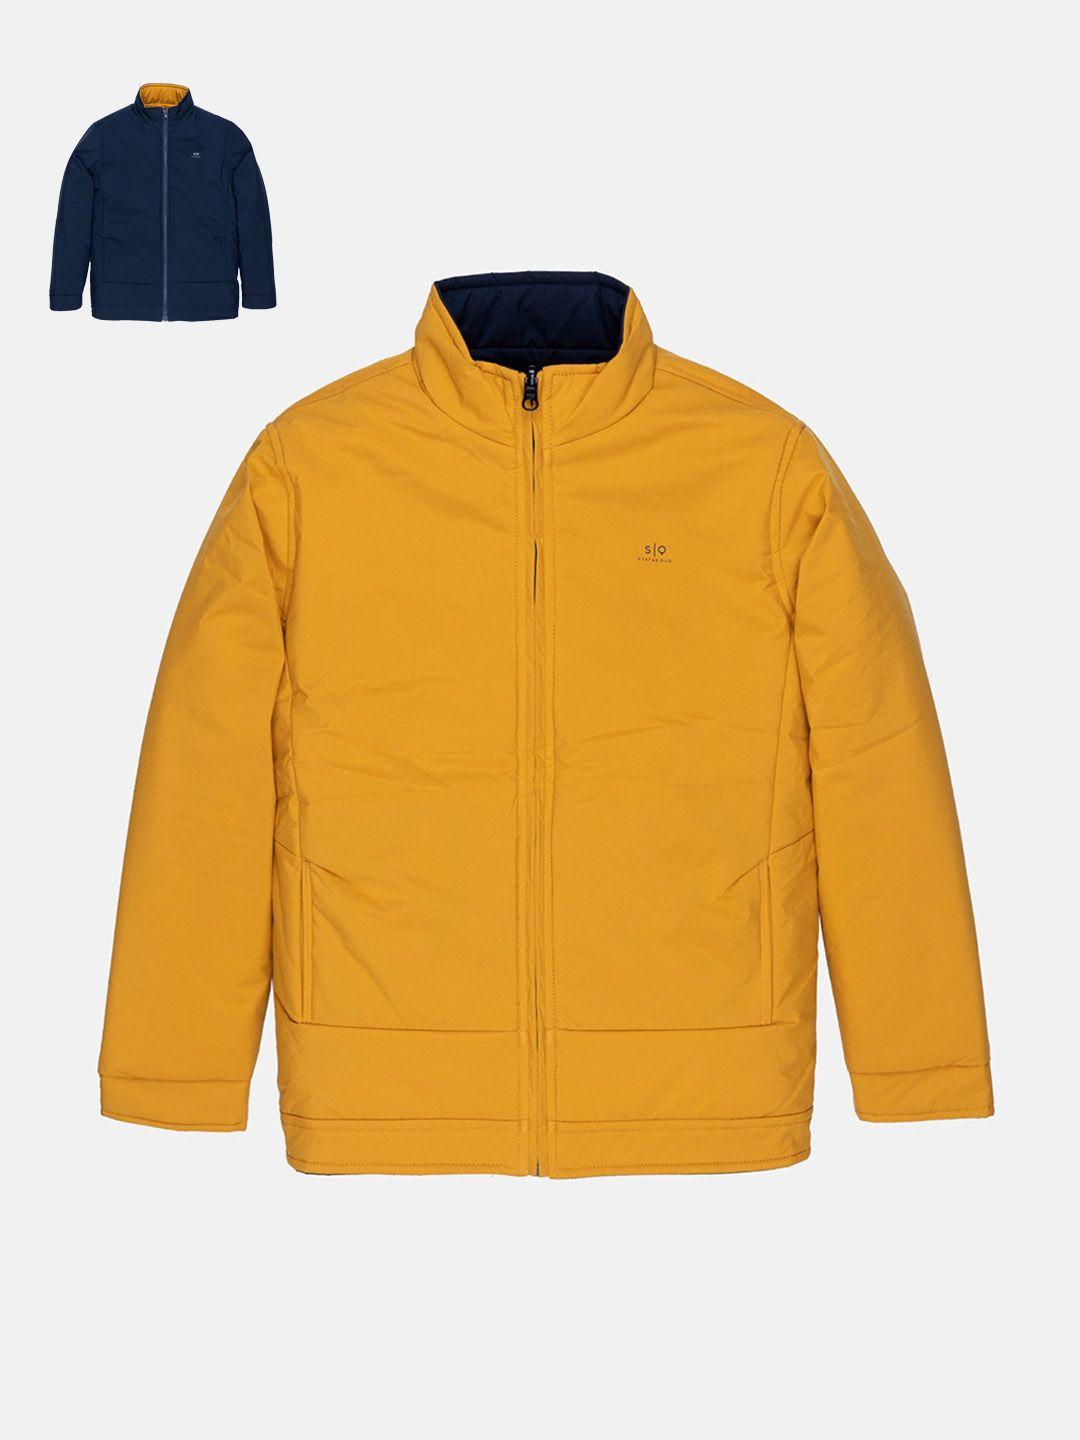 status quo boys yellow navy blue reversible high neck padded jacket